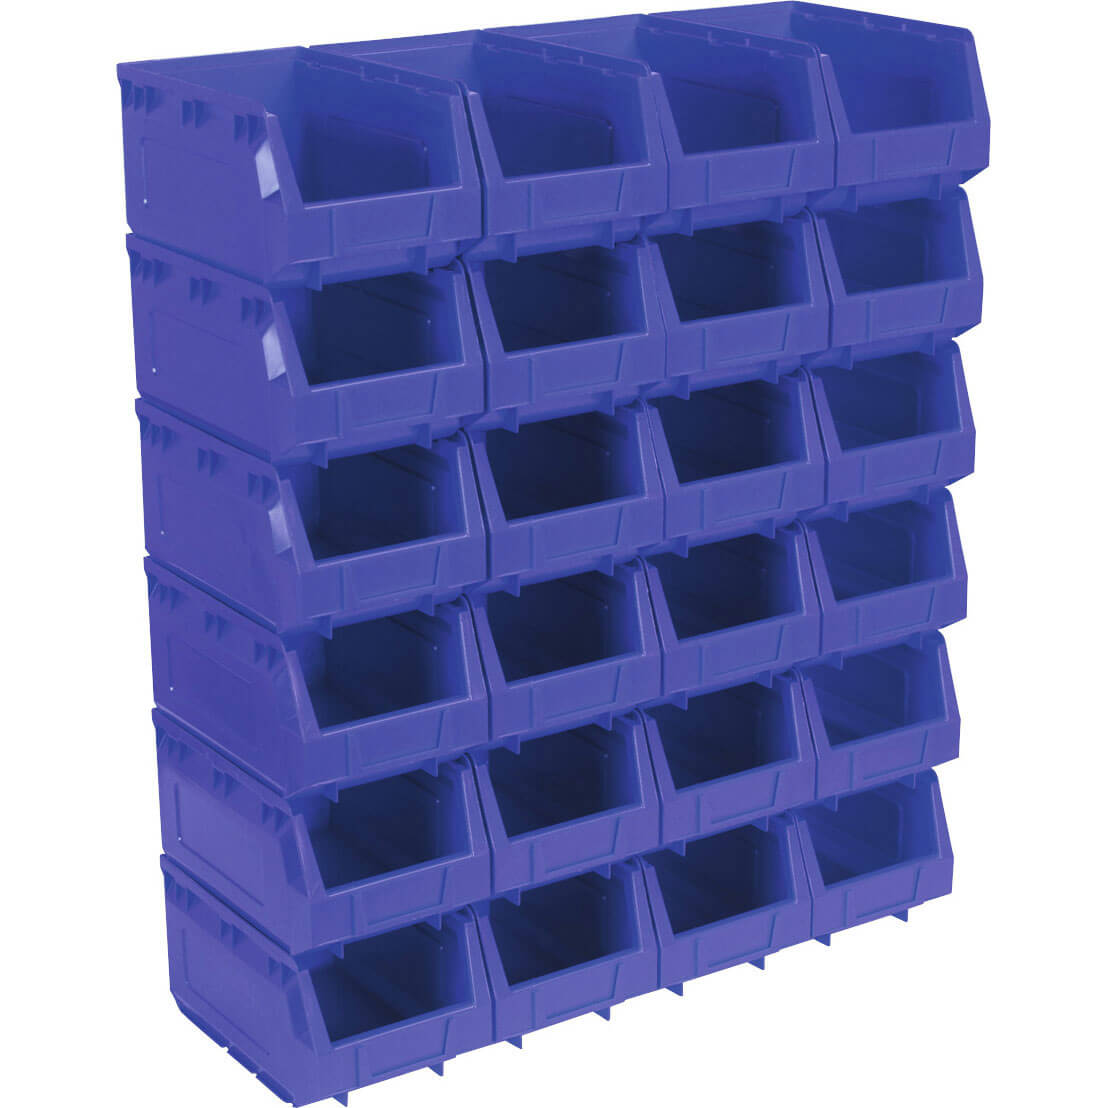 Image of Sealey Plastic Storage Bin 103 x 85 x 53mm Blue 24